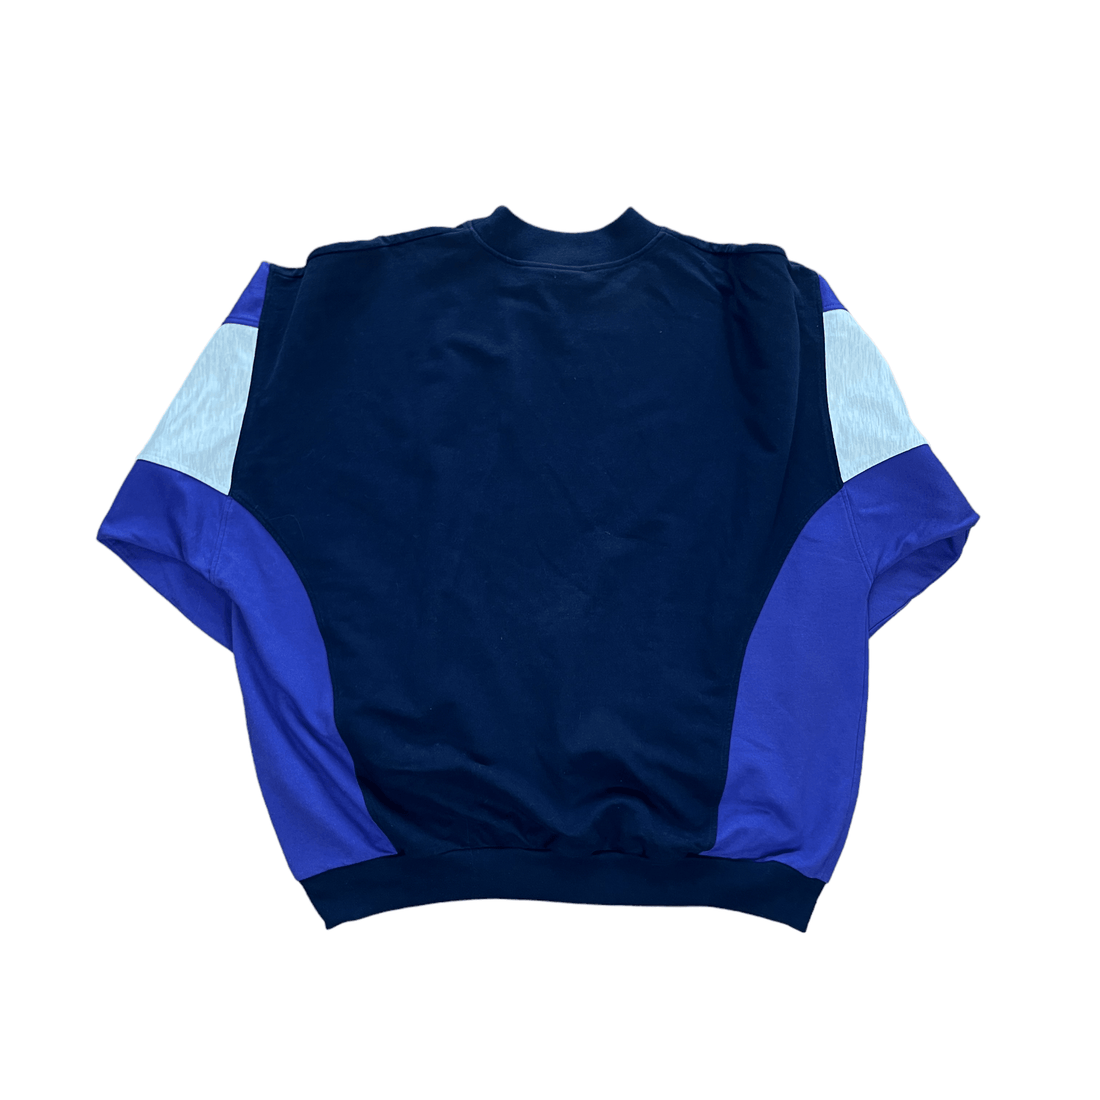 Vintage 90s Navy Blue, Purple + Grey Adidas Sweatshirt - Extra Large - The Streetwear Studio